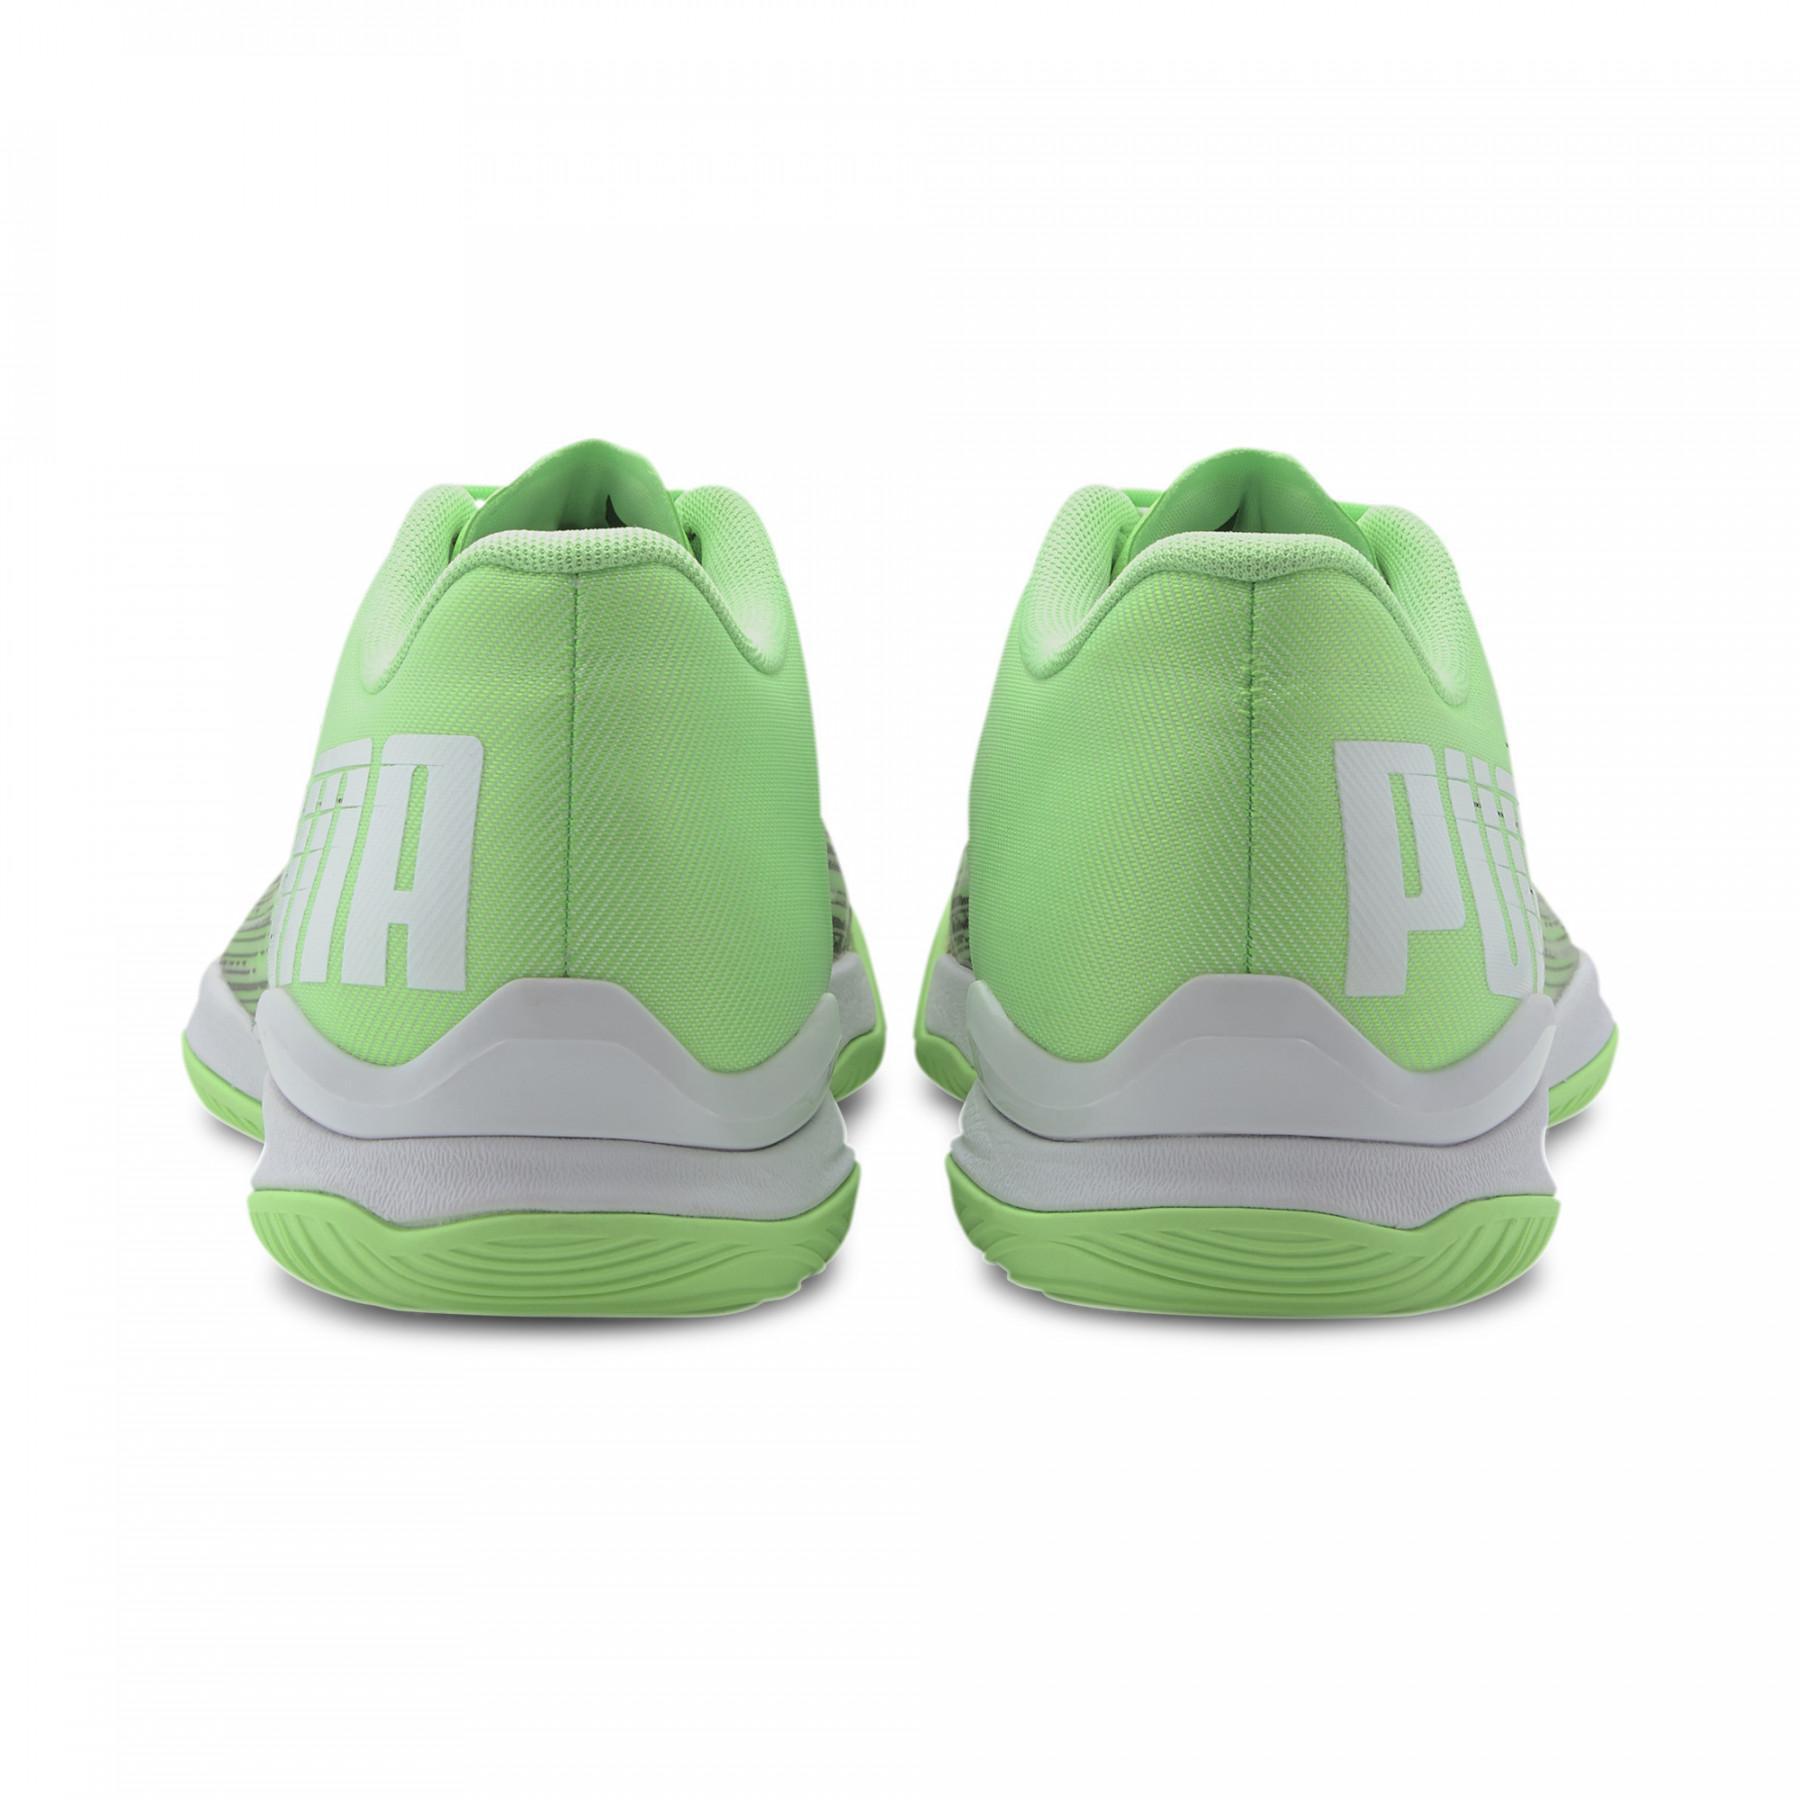 Zapatos Puma Adrenalite 2.1